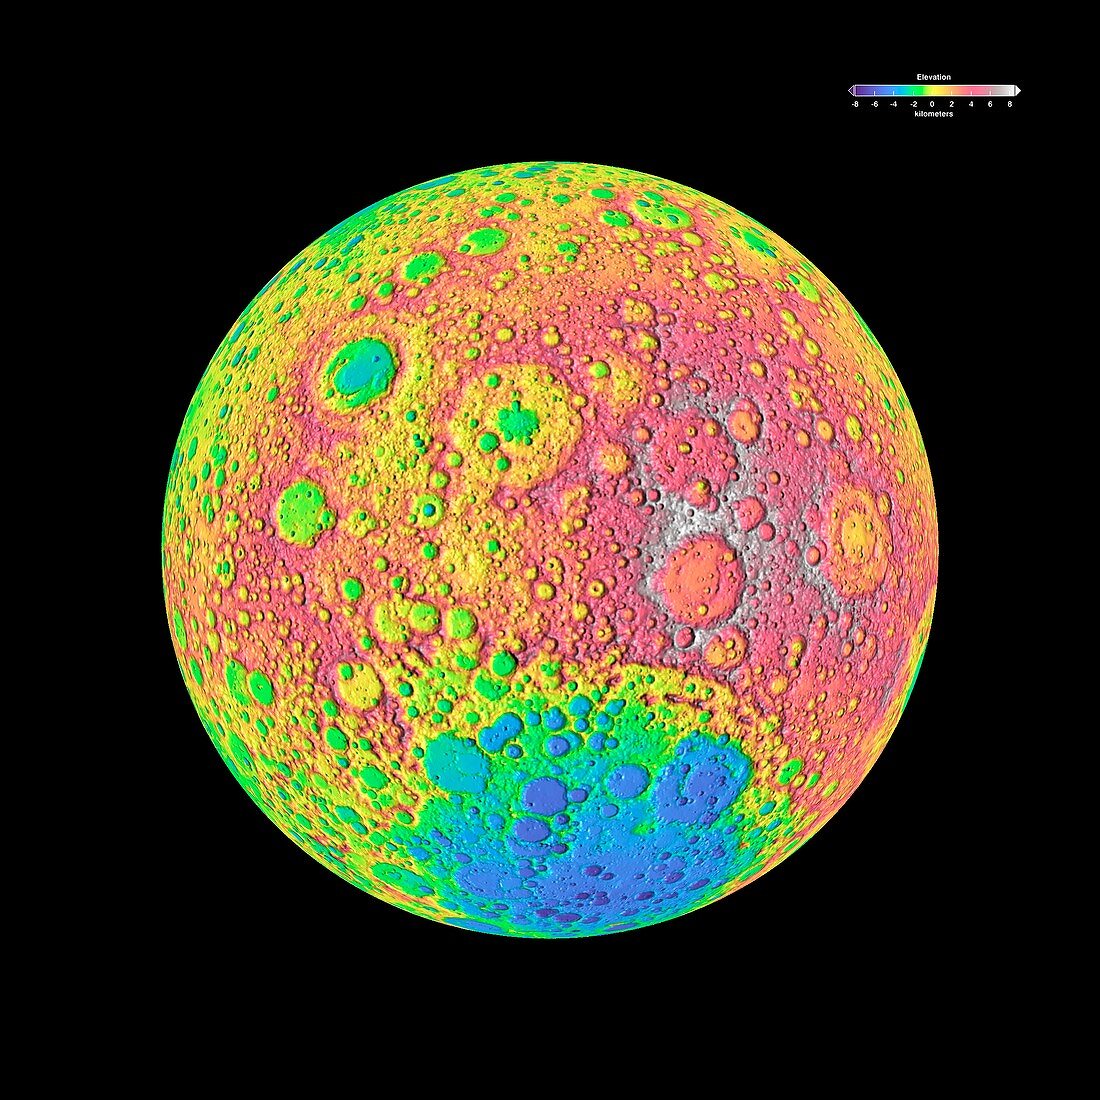 Moon's far side,LRO image